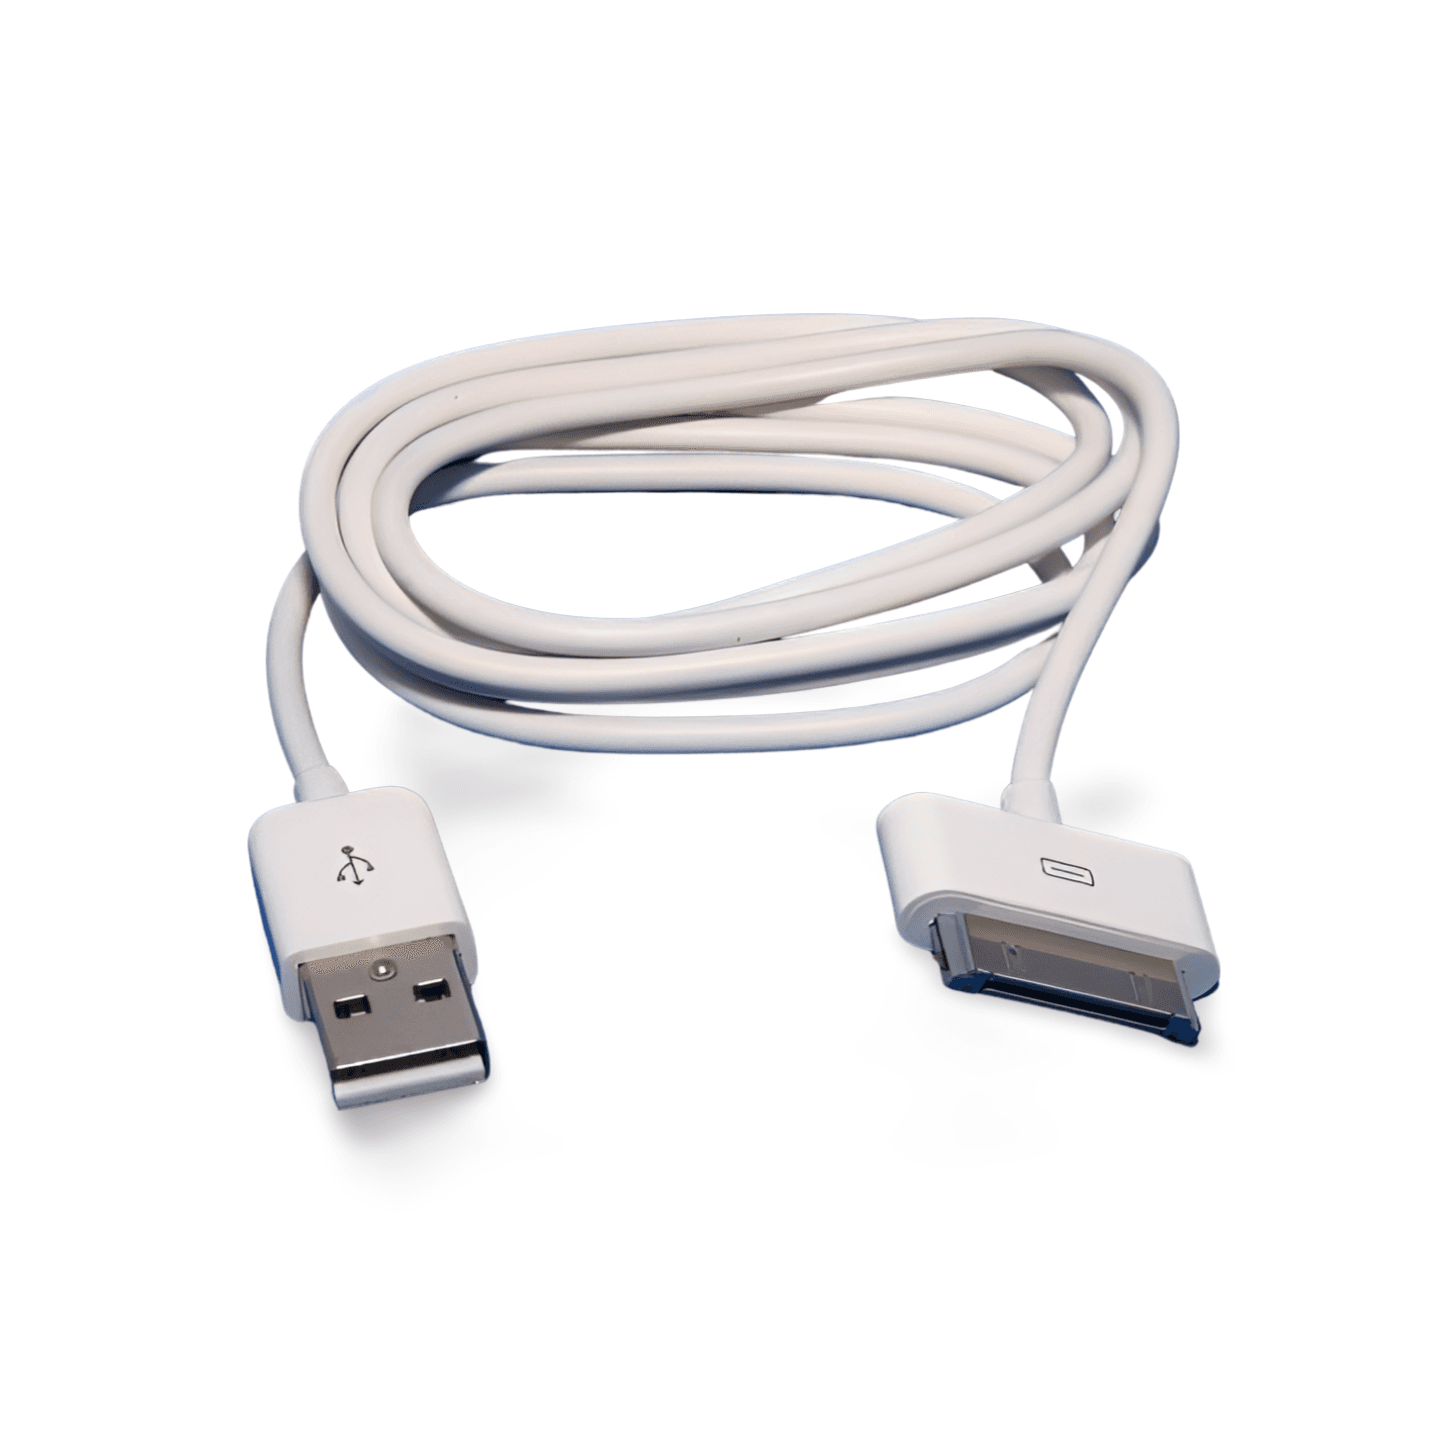 3ft Apple iPad2 USB Data Cable white